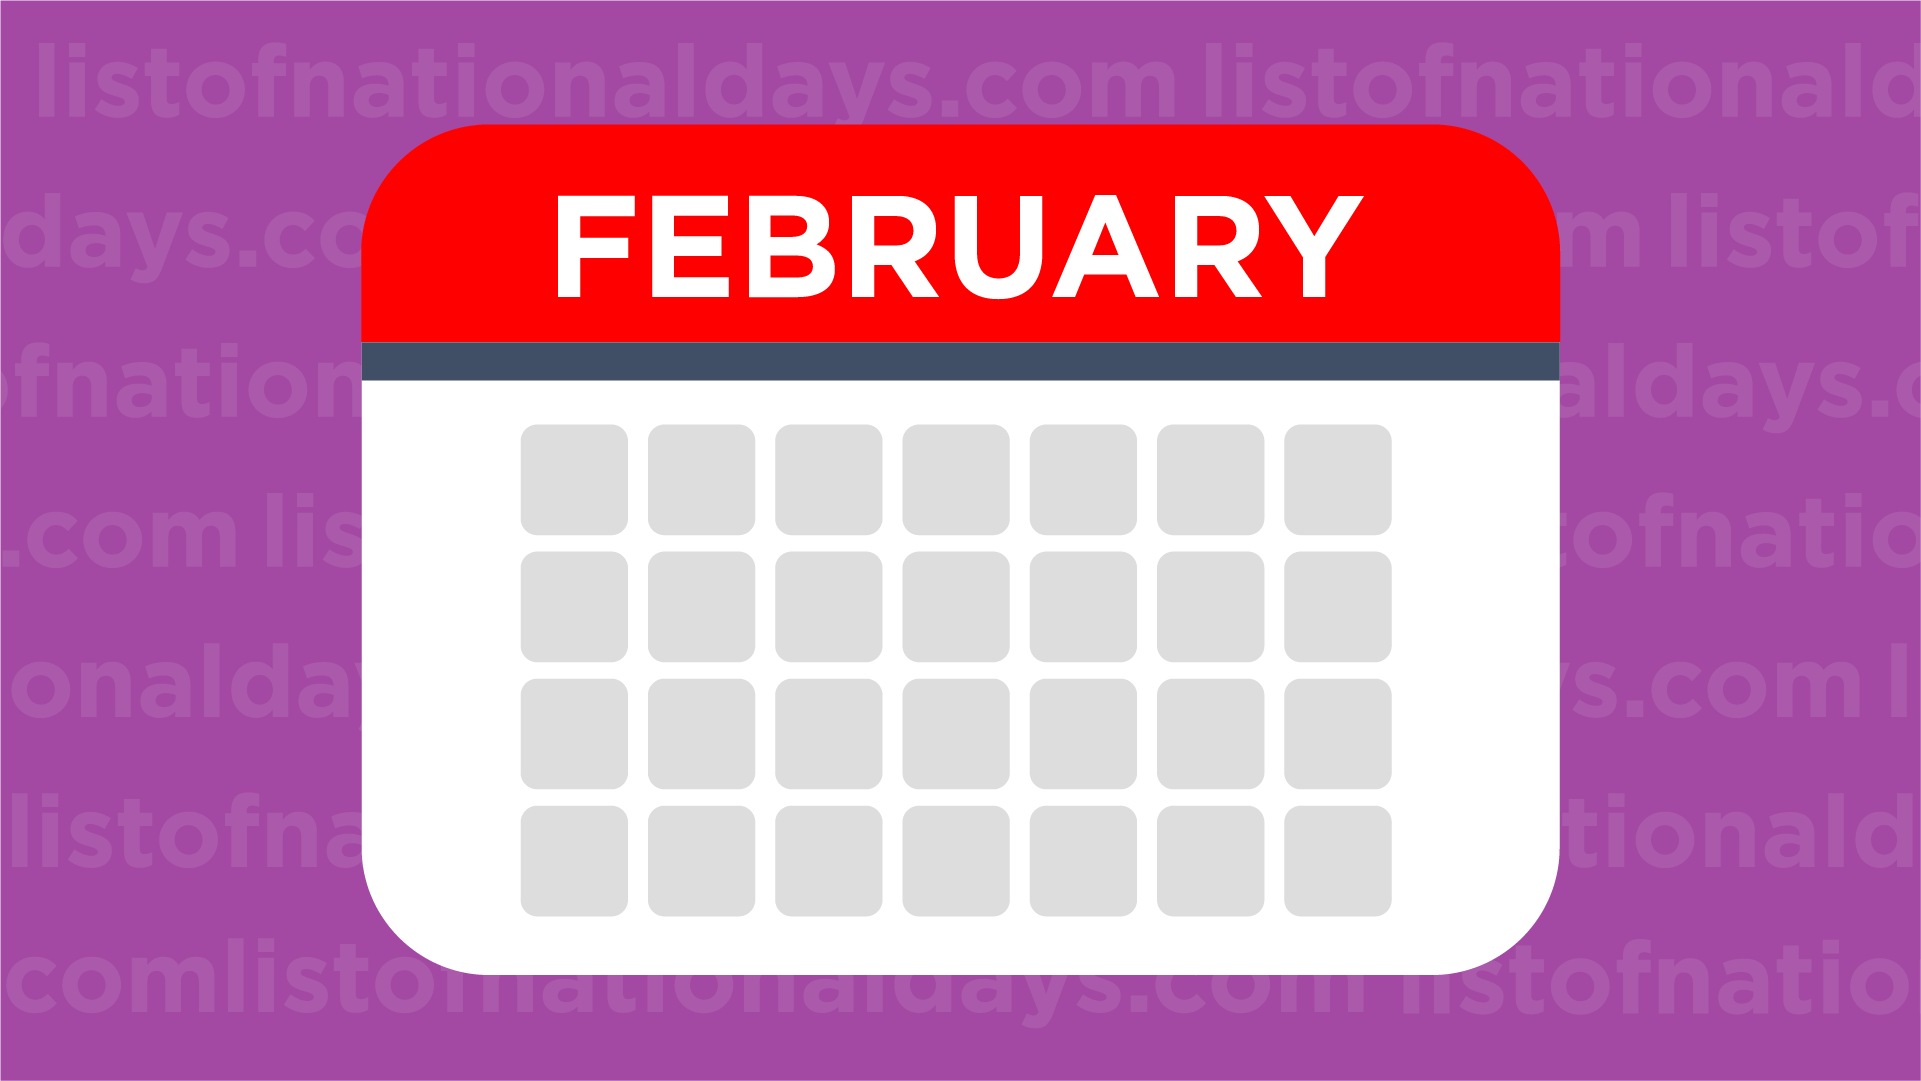 printable-february-2023-calendar-free-12-templates